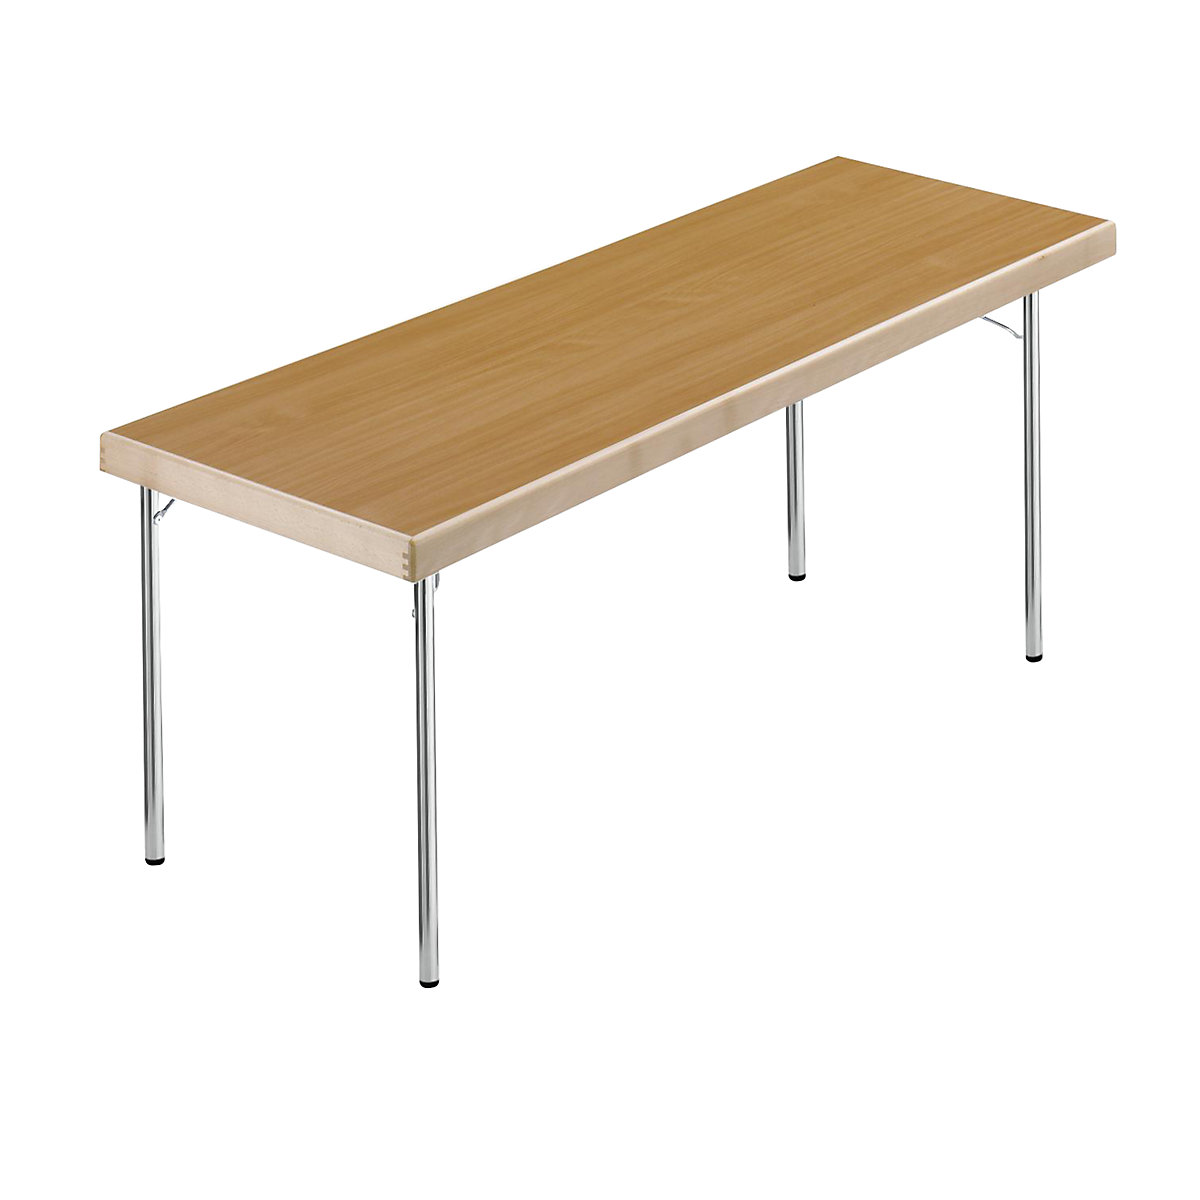 Inklapbare tafel, 4 voetsframe, 1700 x 700 mm, frame verchroomd, blad beukenhoutdecor-10